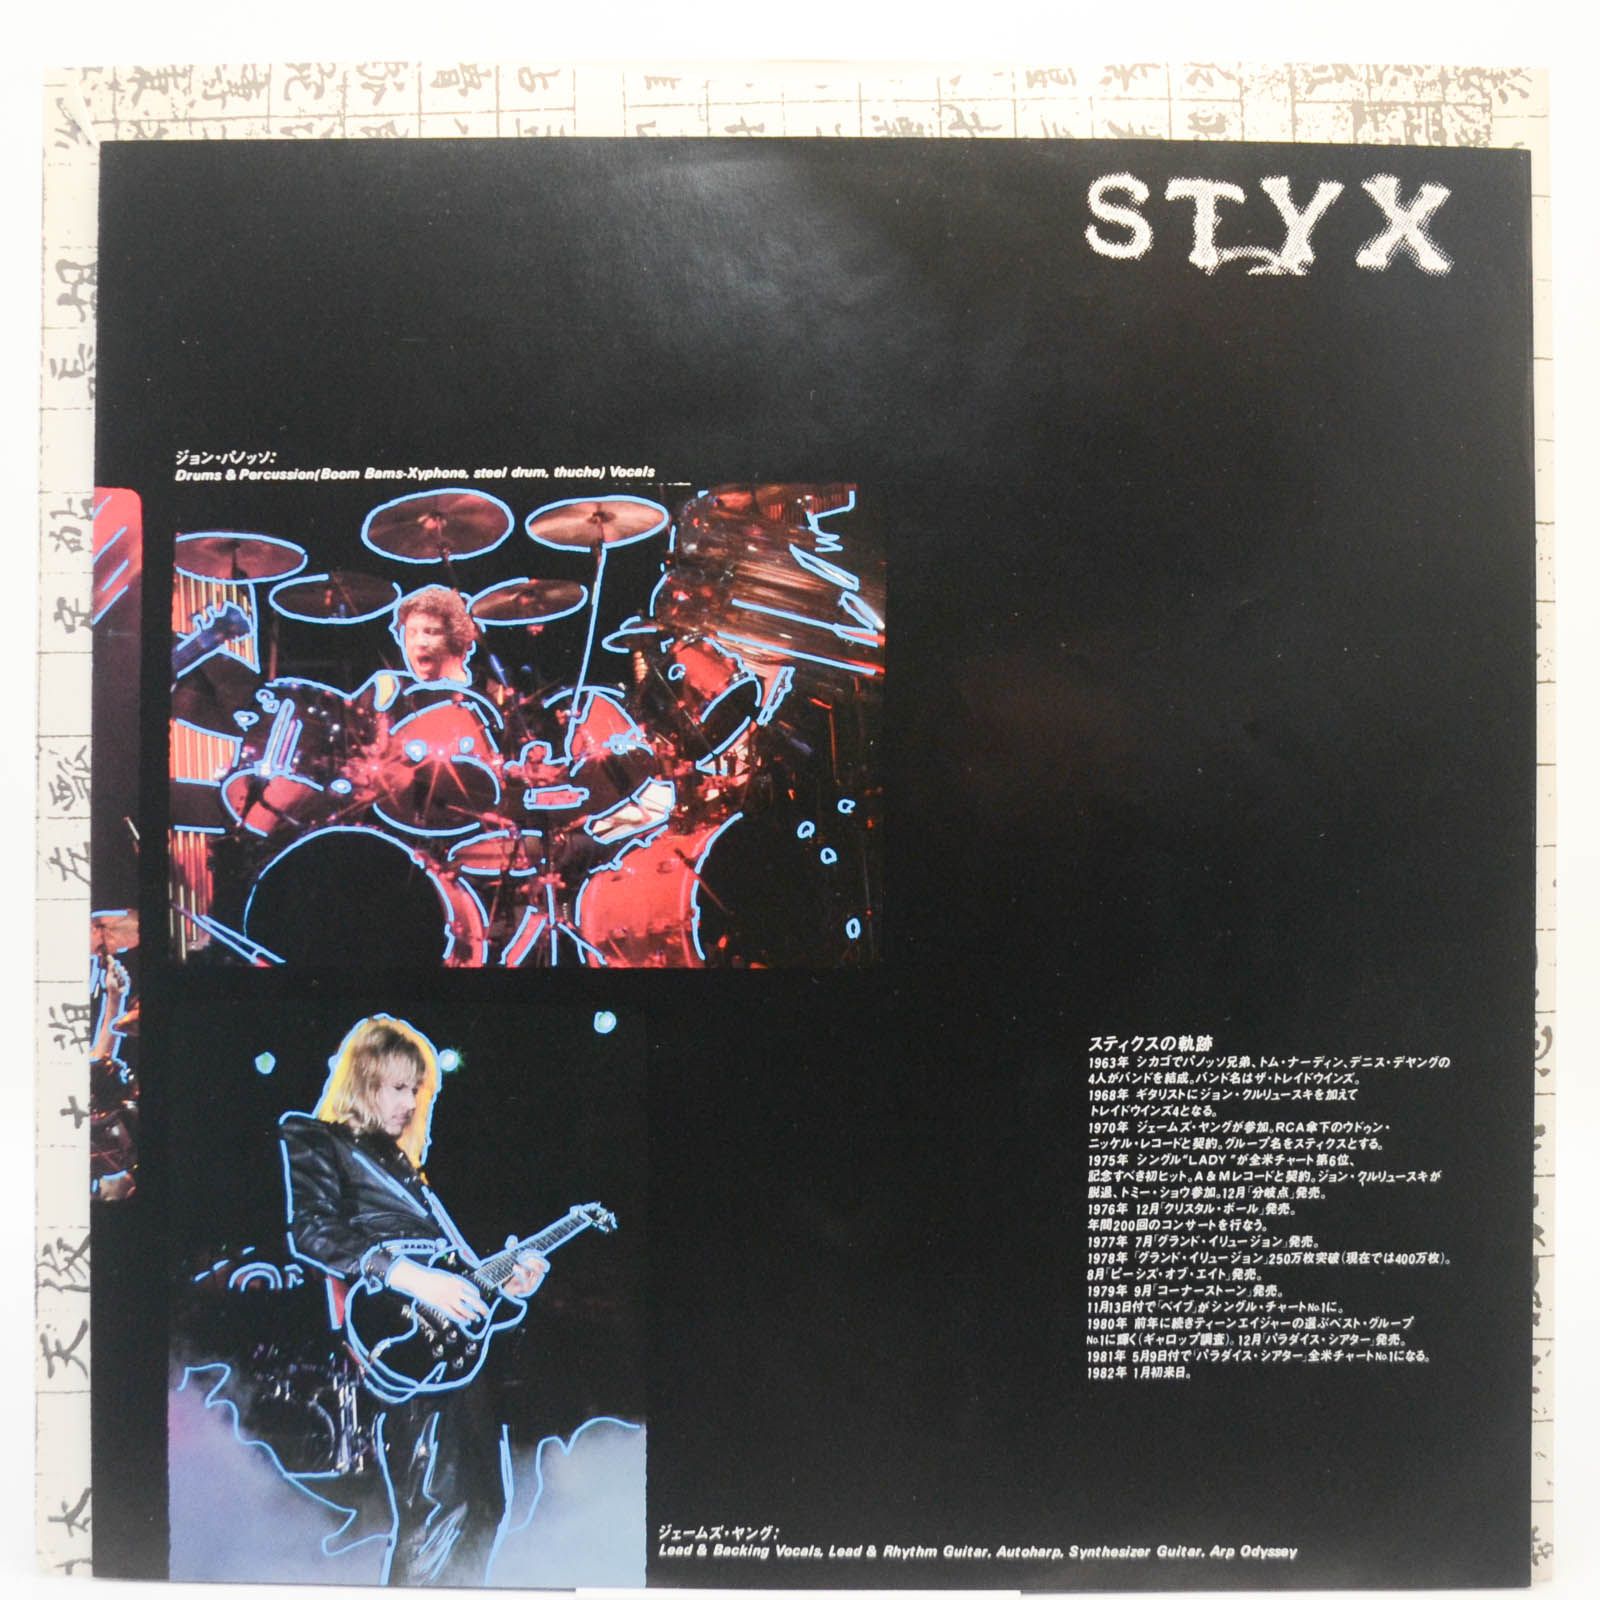 Styx — Reppoo, 1981